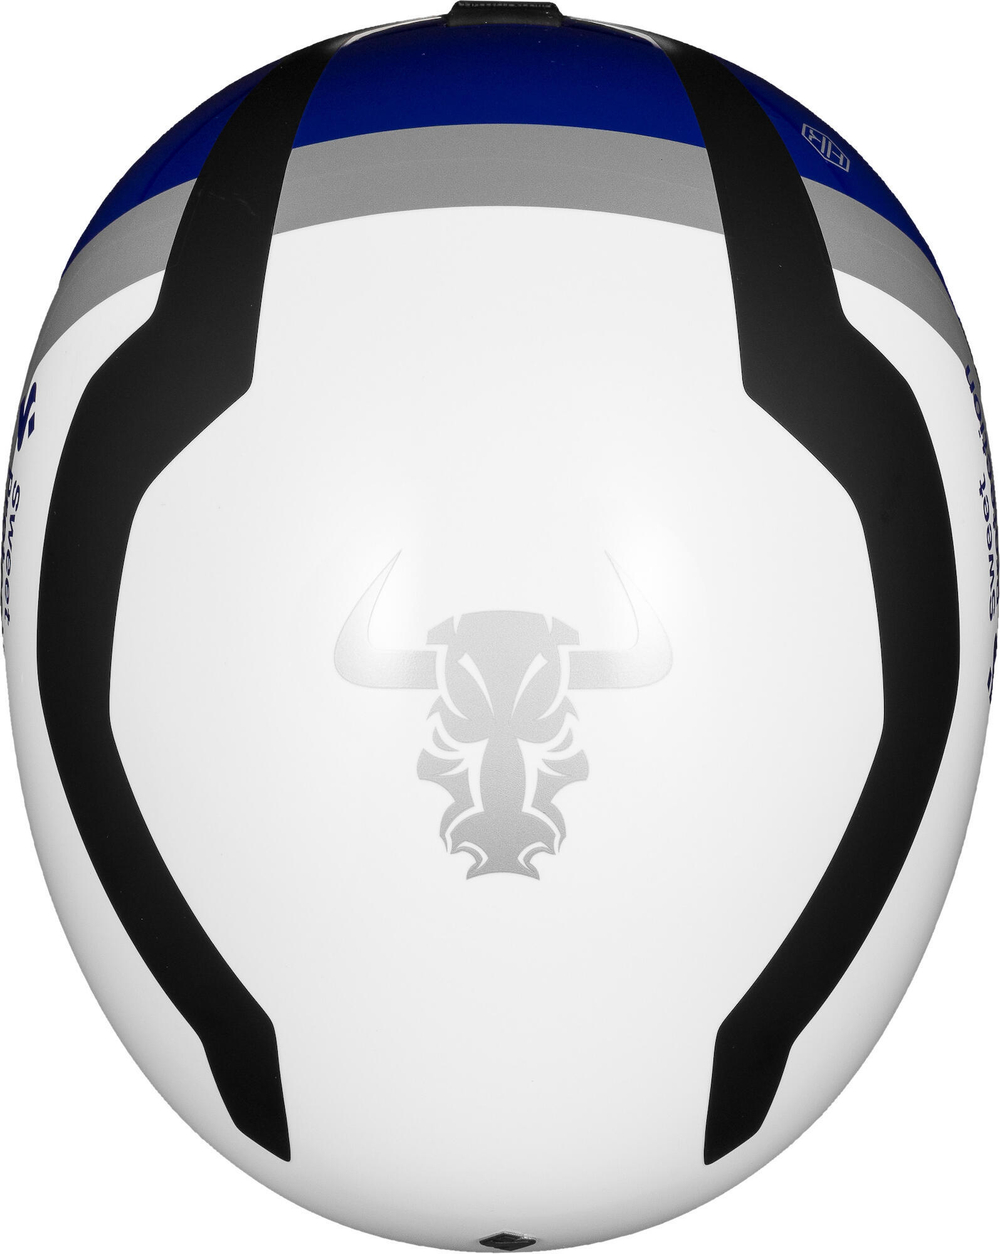 SWEET PROTECTION шлем горнолыжный 840107 Volata 2Vi Mips Helmet x Henrik HK006